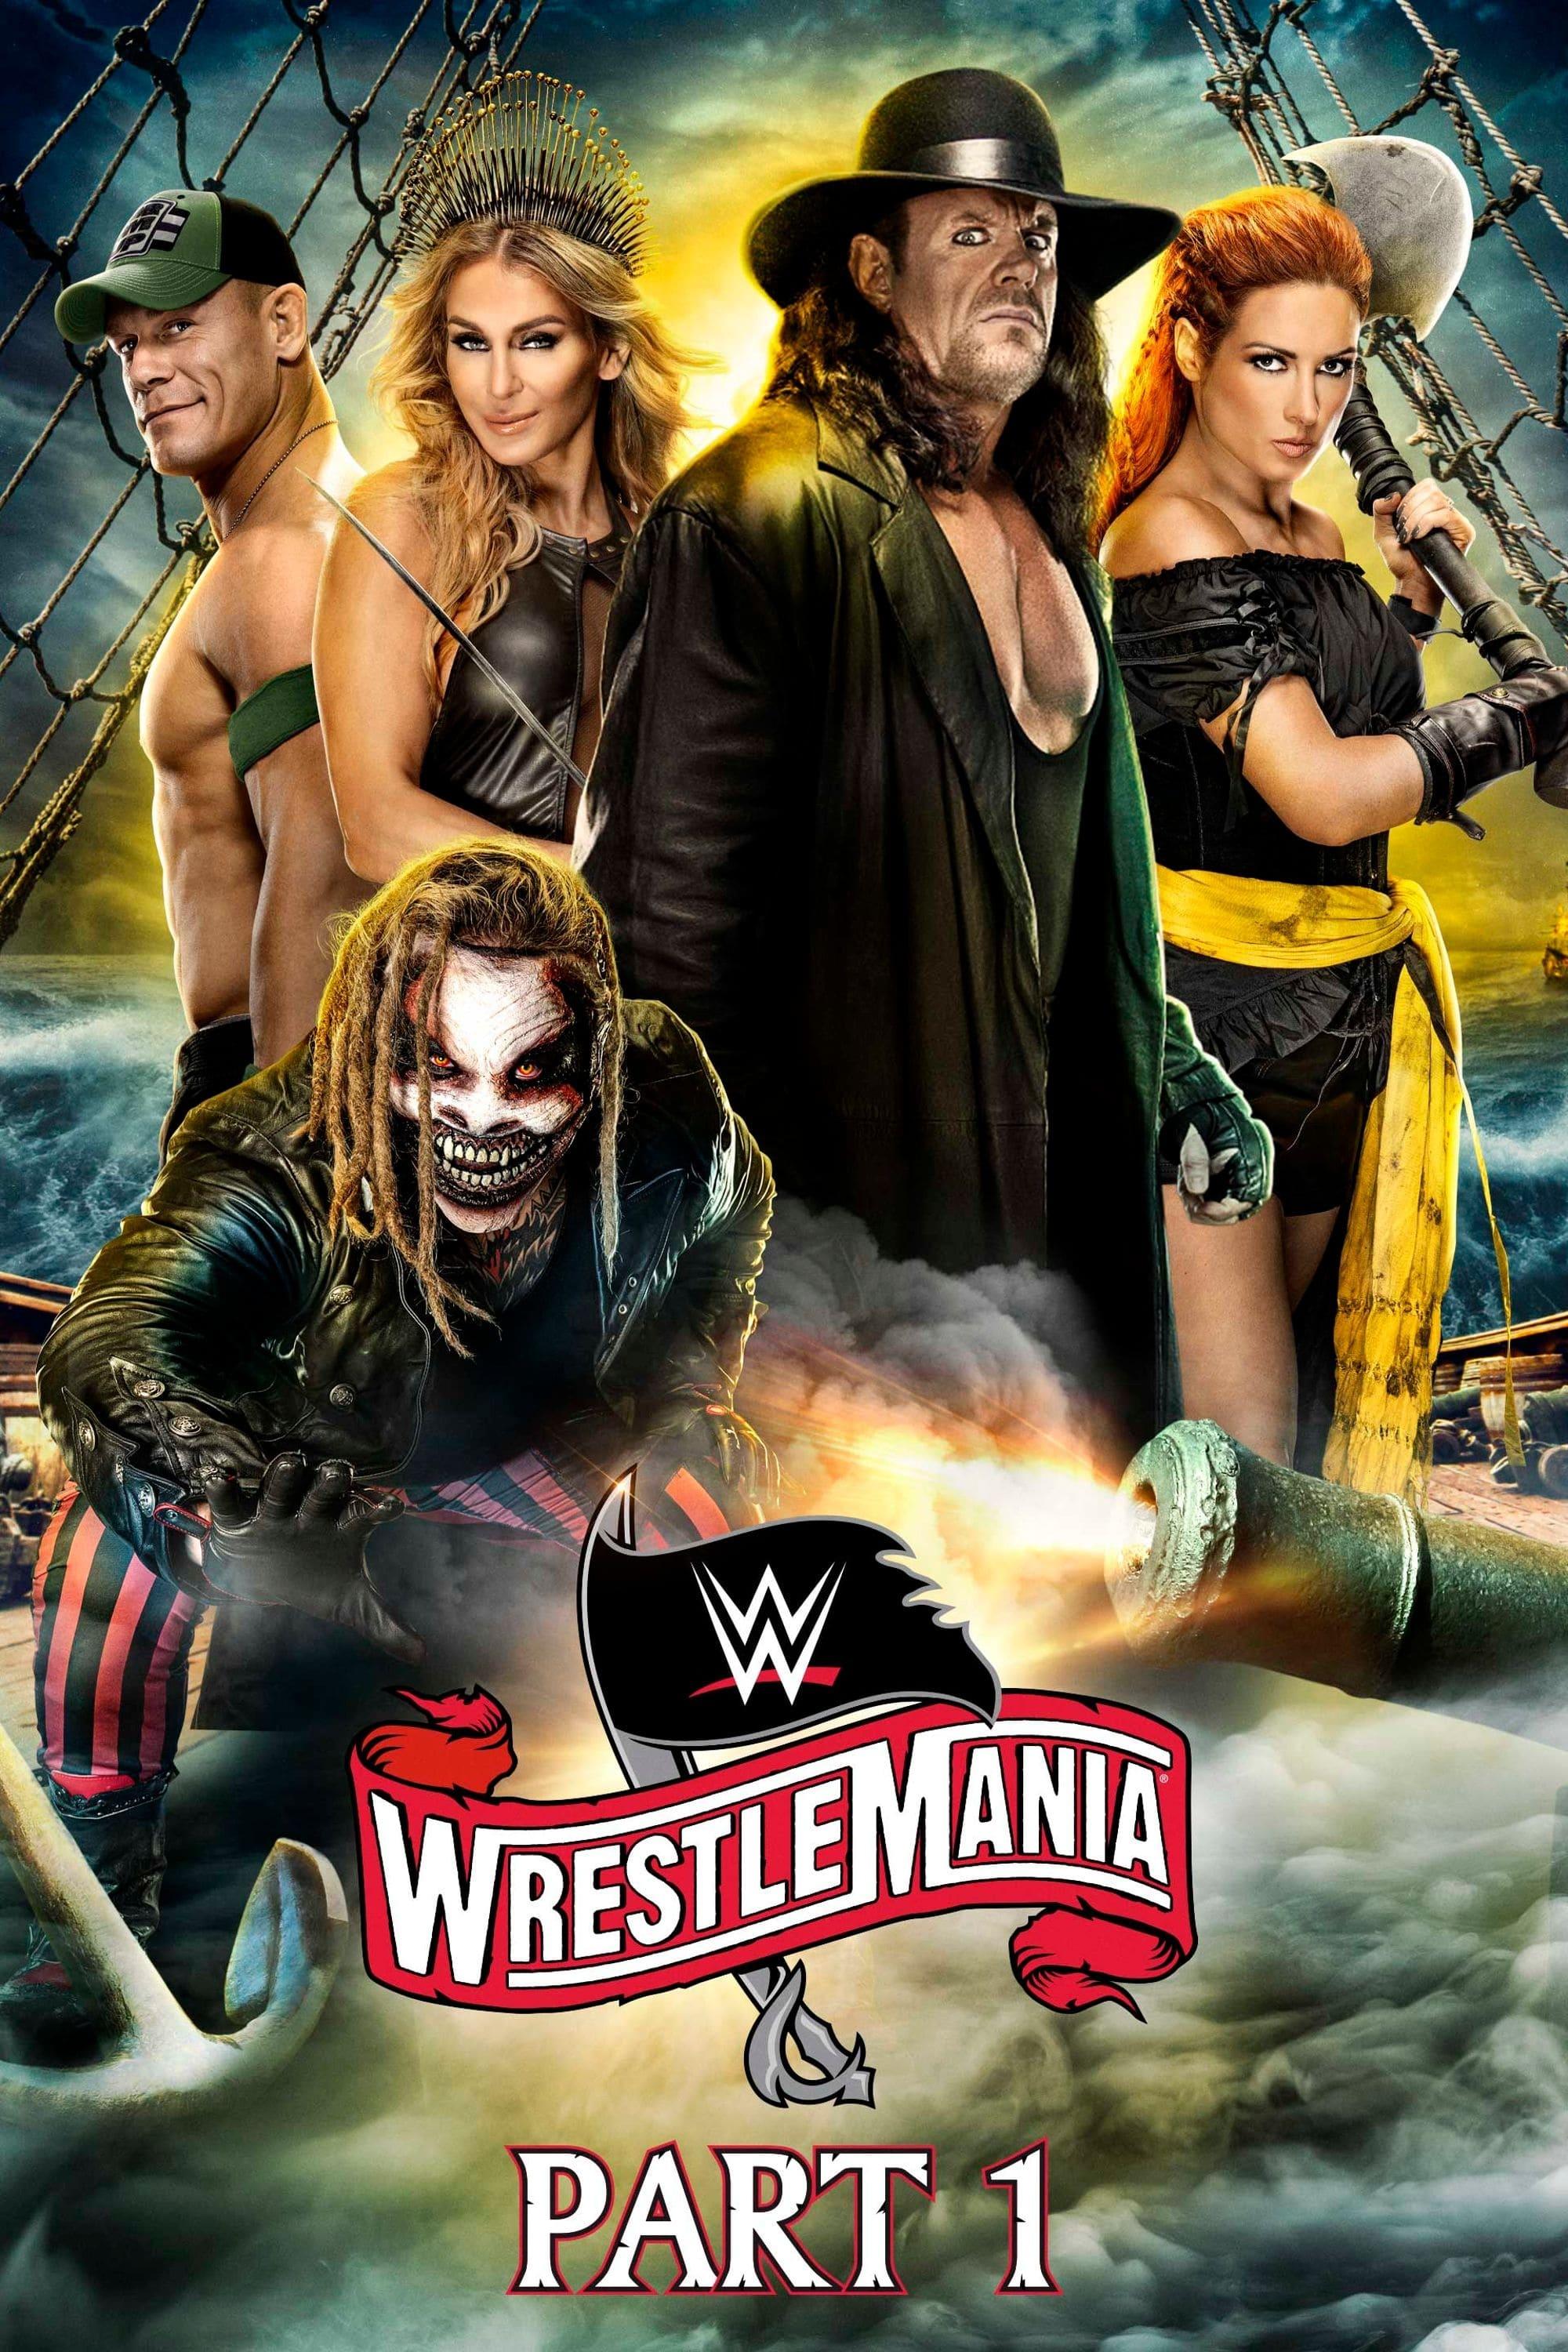 WWE WrestleMania 36: Part 1 poster